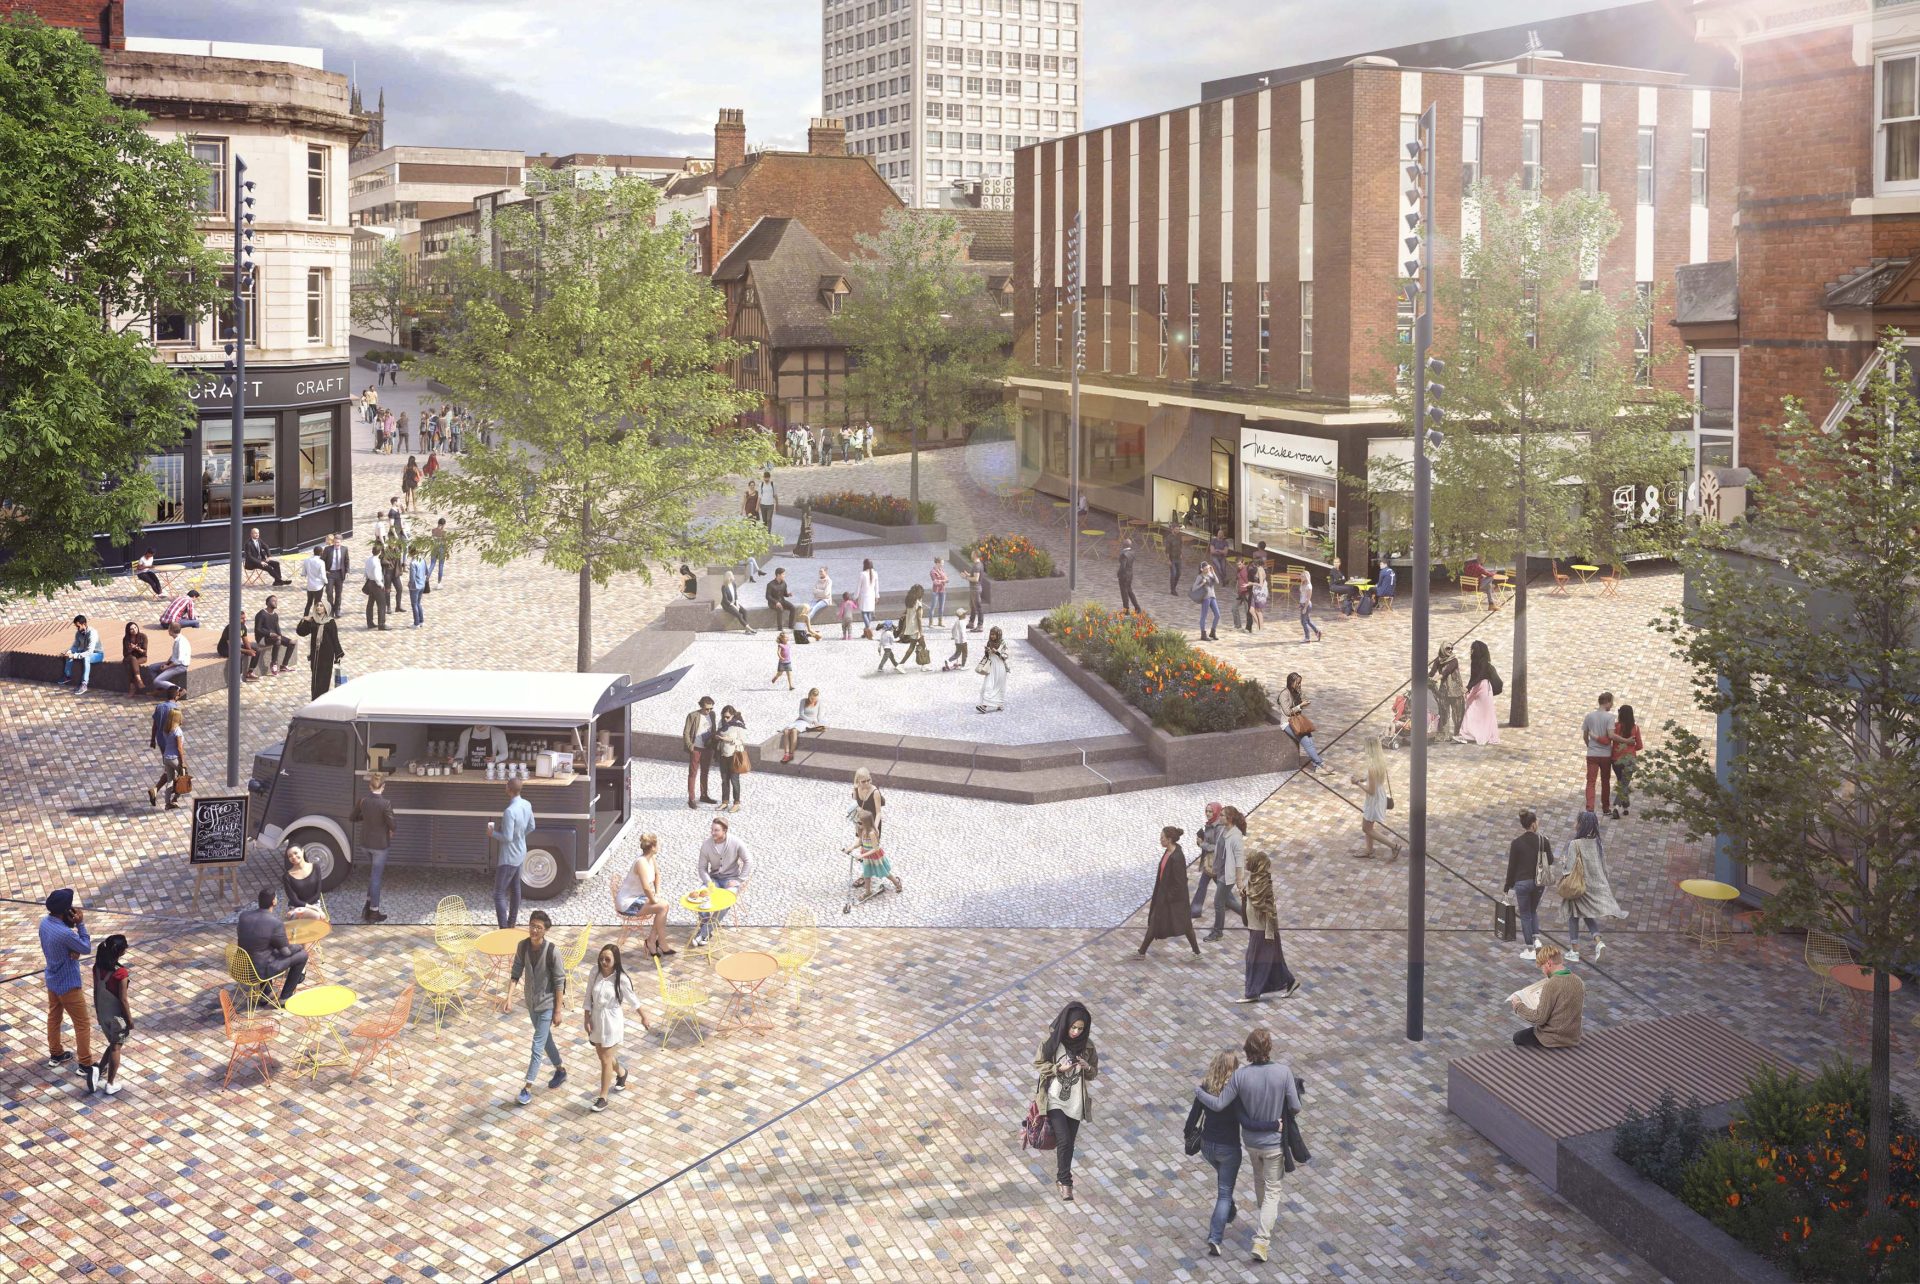 Wolverhampton city centre transformation starts this month